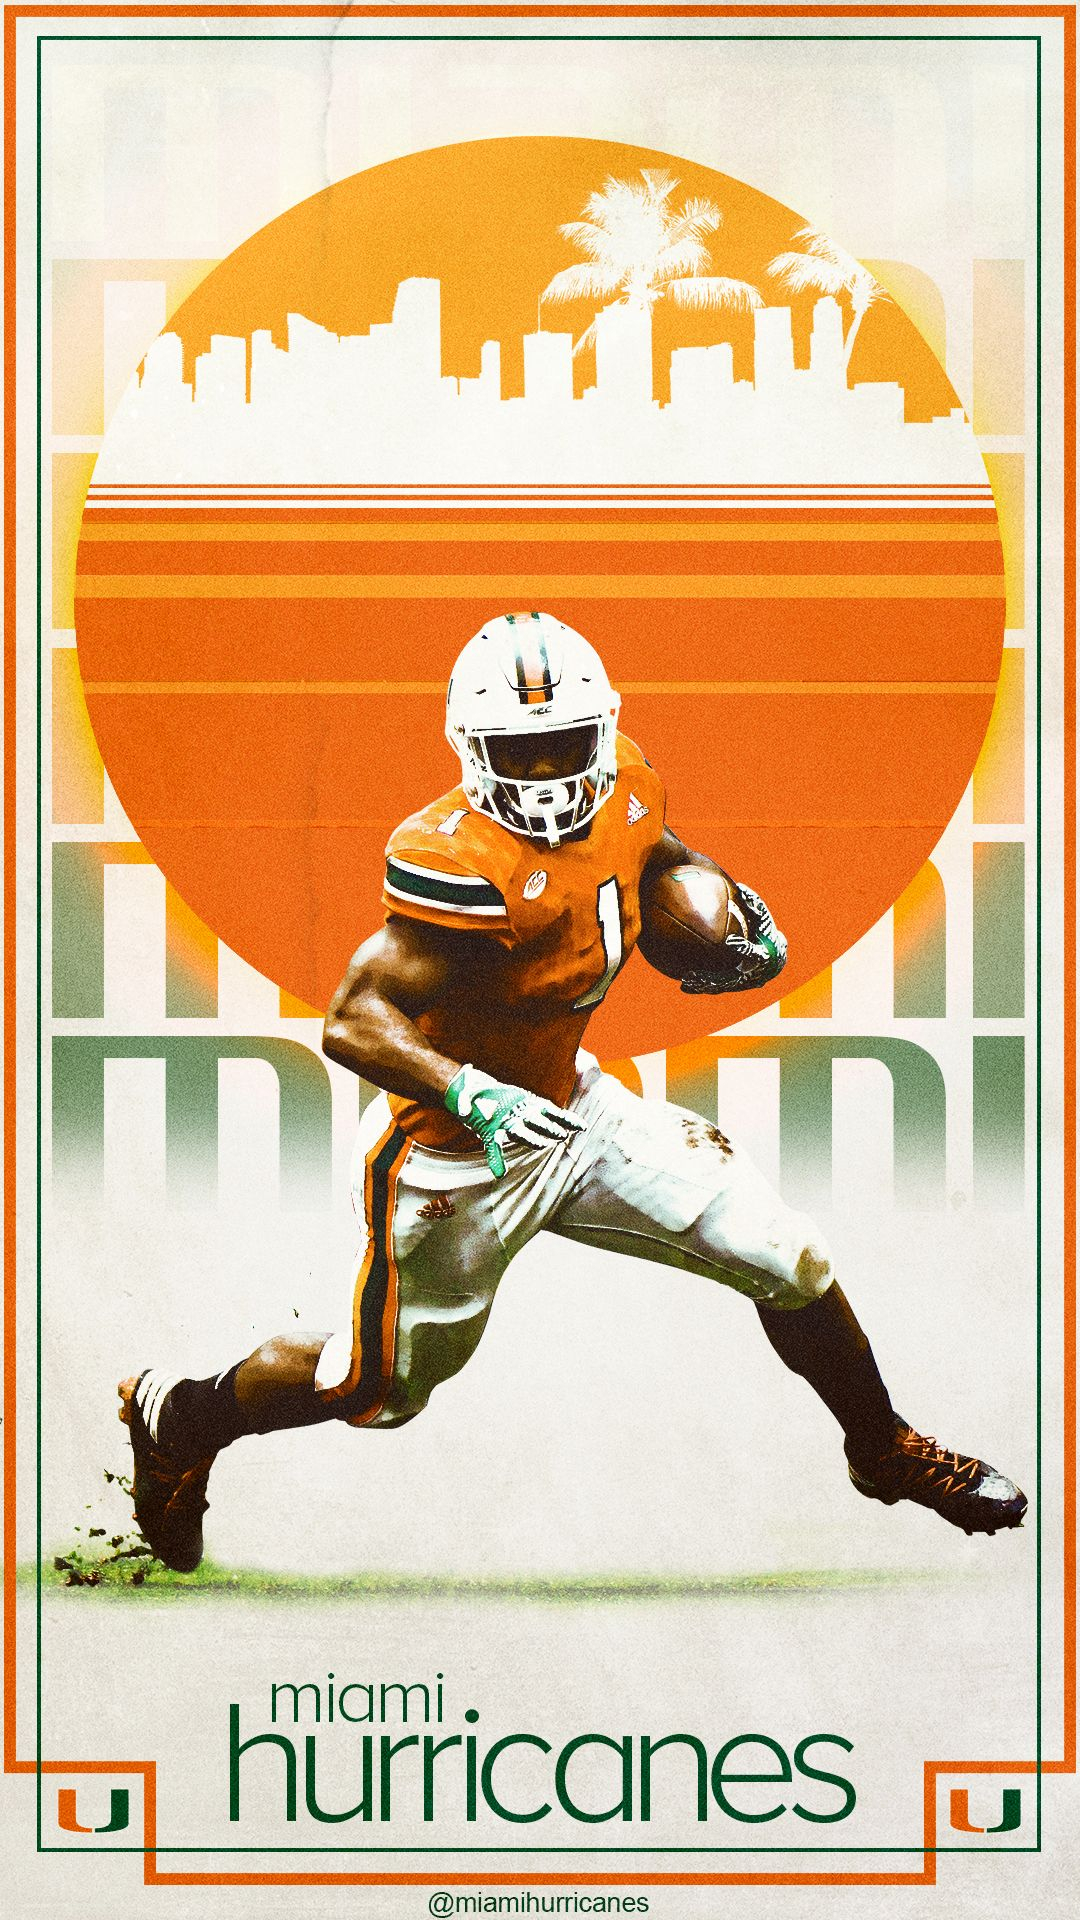 1080x1920 University of Miami Athletics Vintage Poster Wallpapers on Behance | University of miami, Hurricanes football, Miami